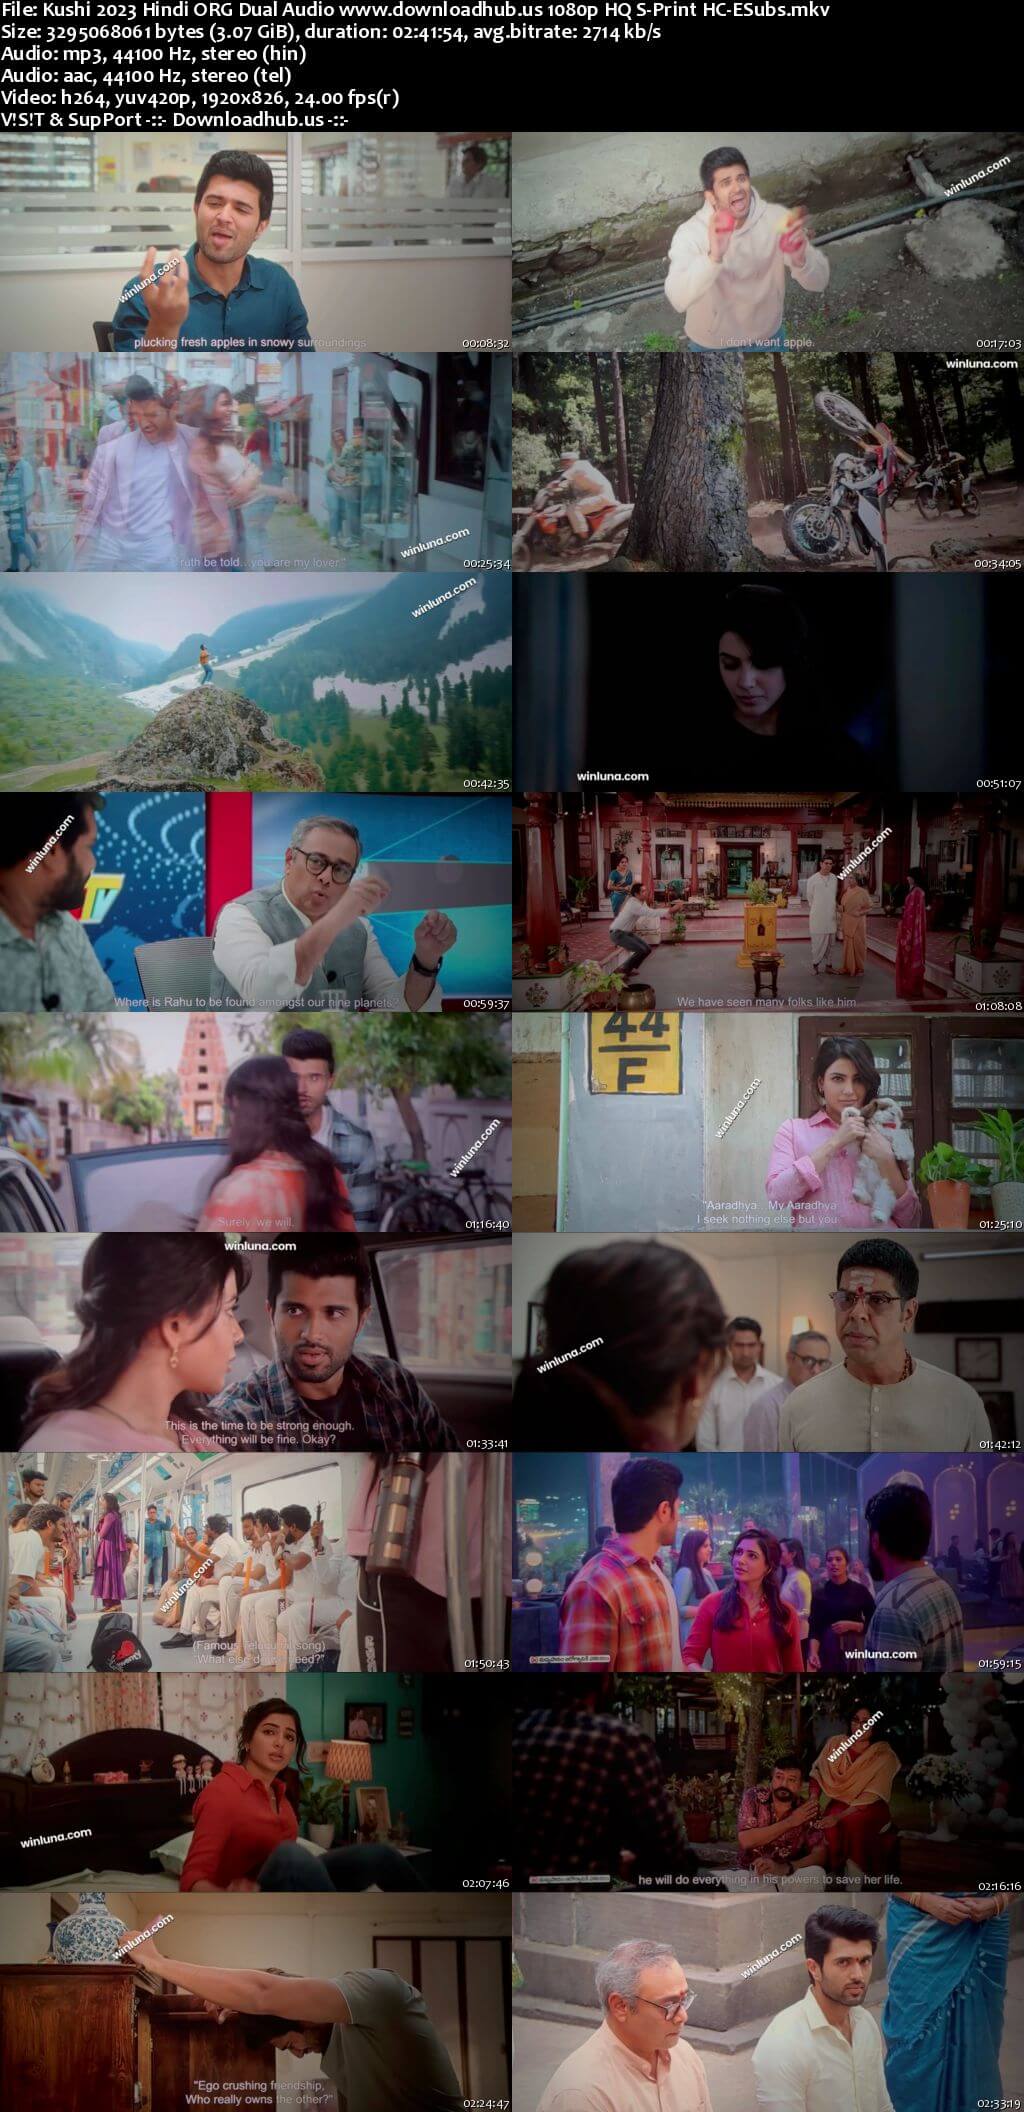 Kushi 2023 Hindi ORG Dual Audio Movie 1080p 720p 480p HQ S-Print HC-ESubs HEVC